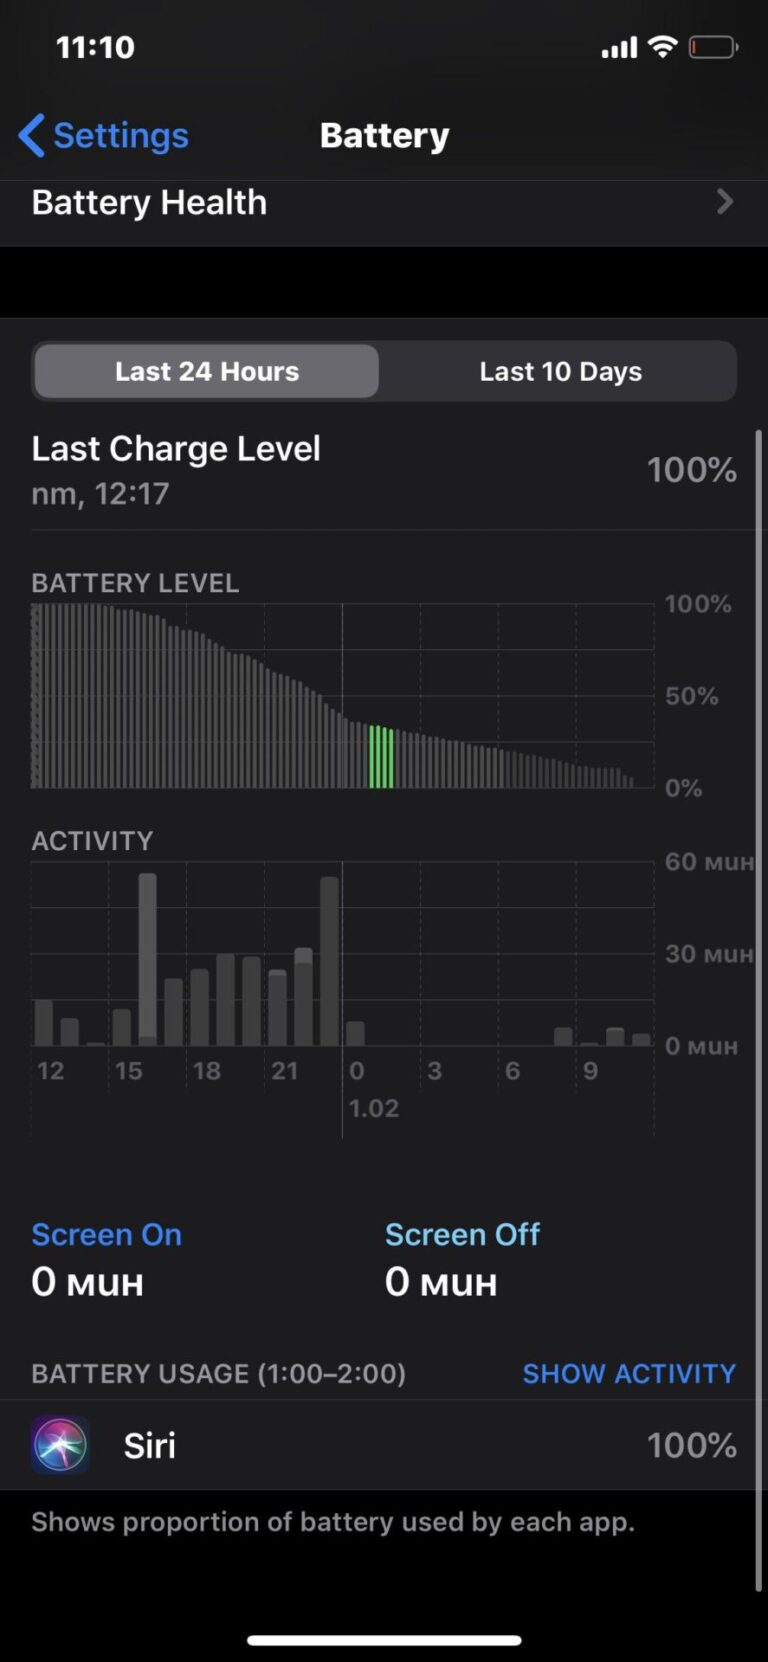 Does Siri drain battery?